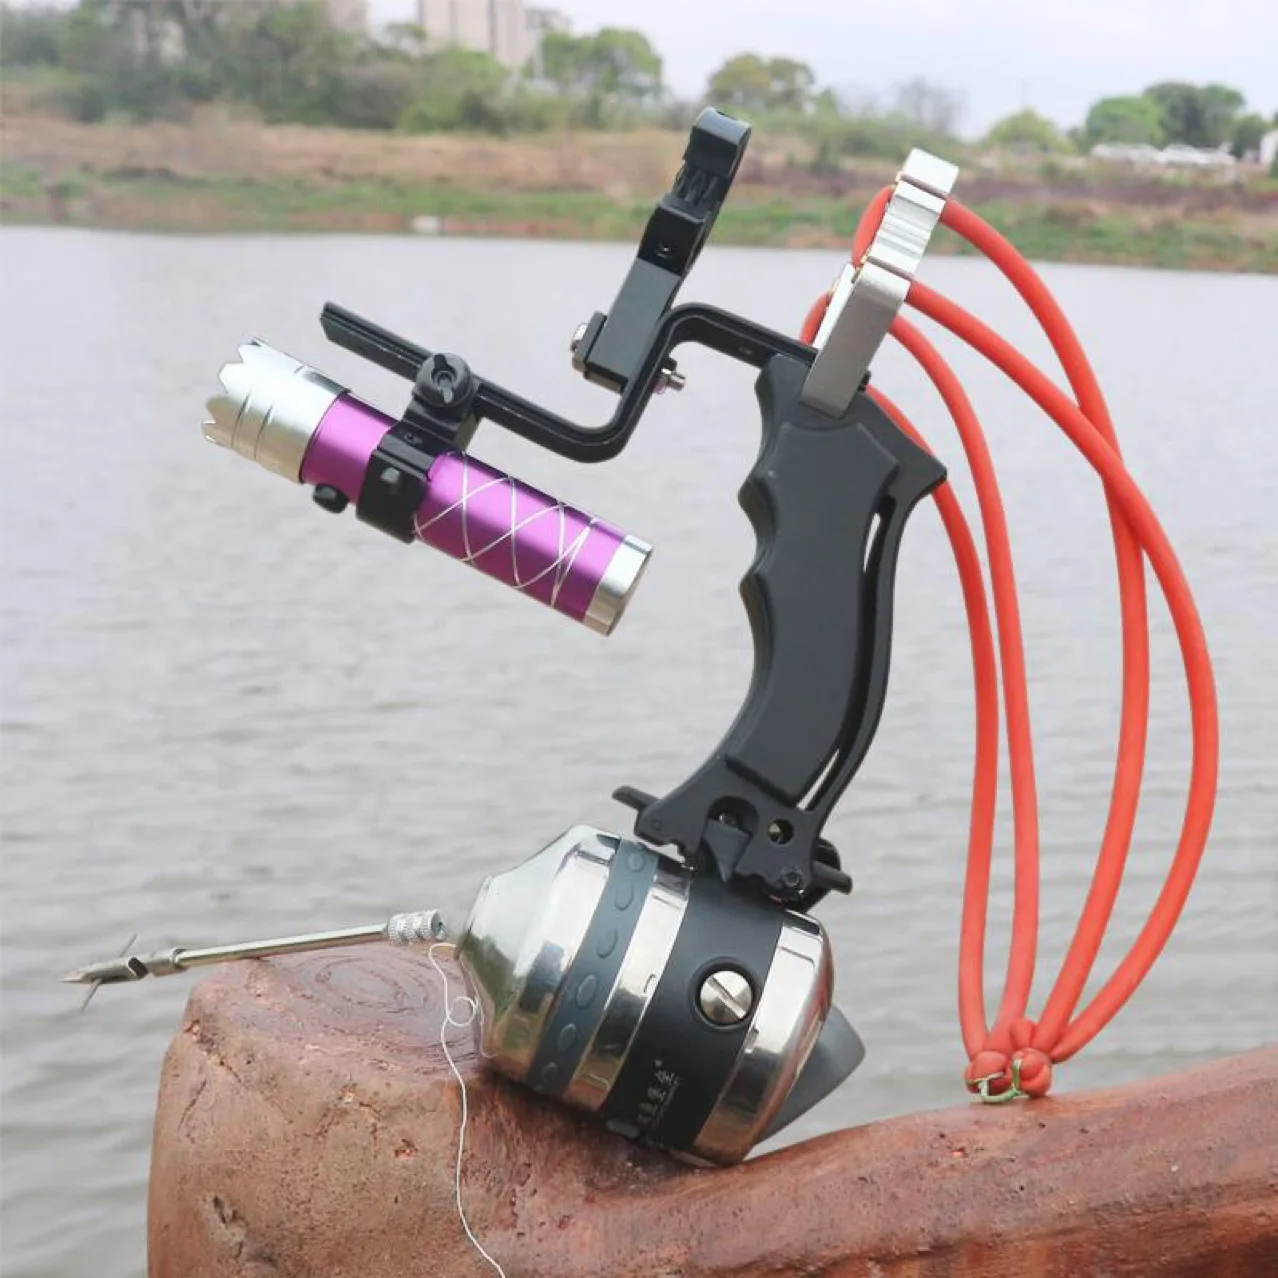 

Professional Fish Shooting Slingshot Stainless stell slingshot set for outdoor hunting, Black